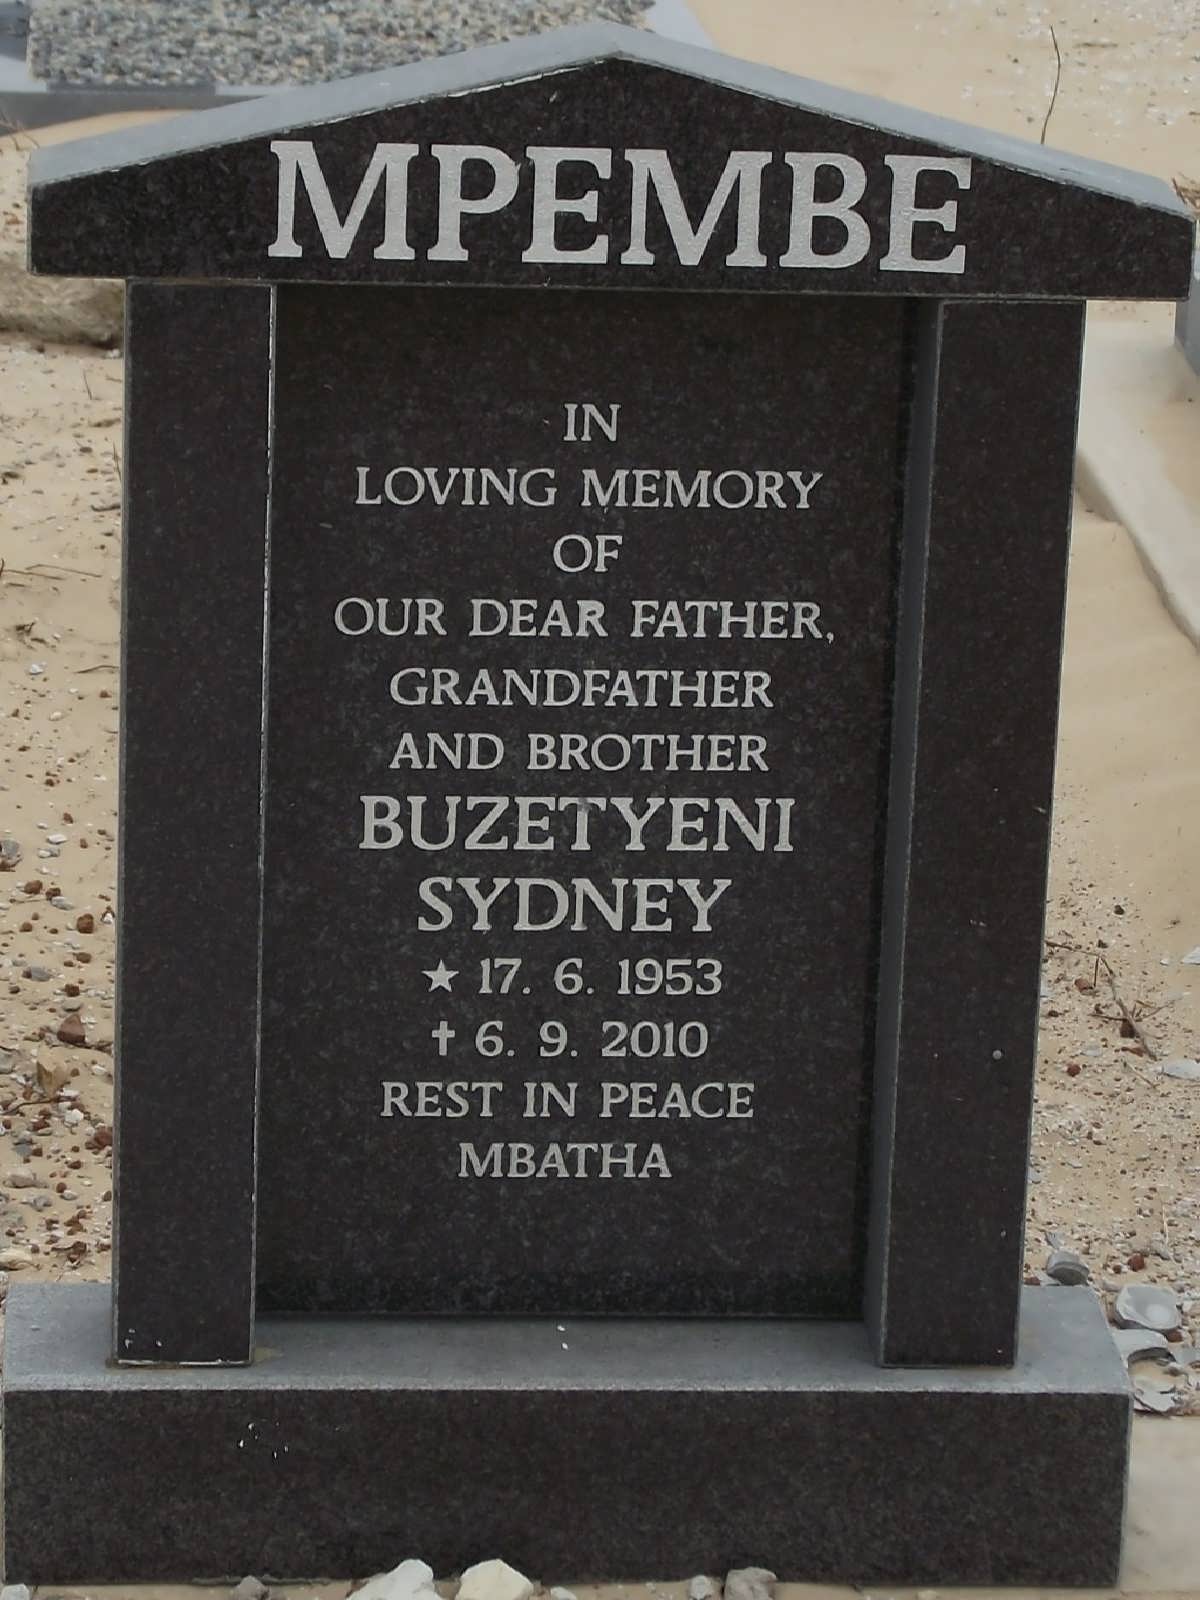 MPEMBE Buzetyeni Sydney 1953-2010